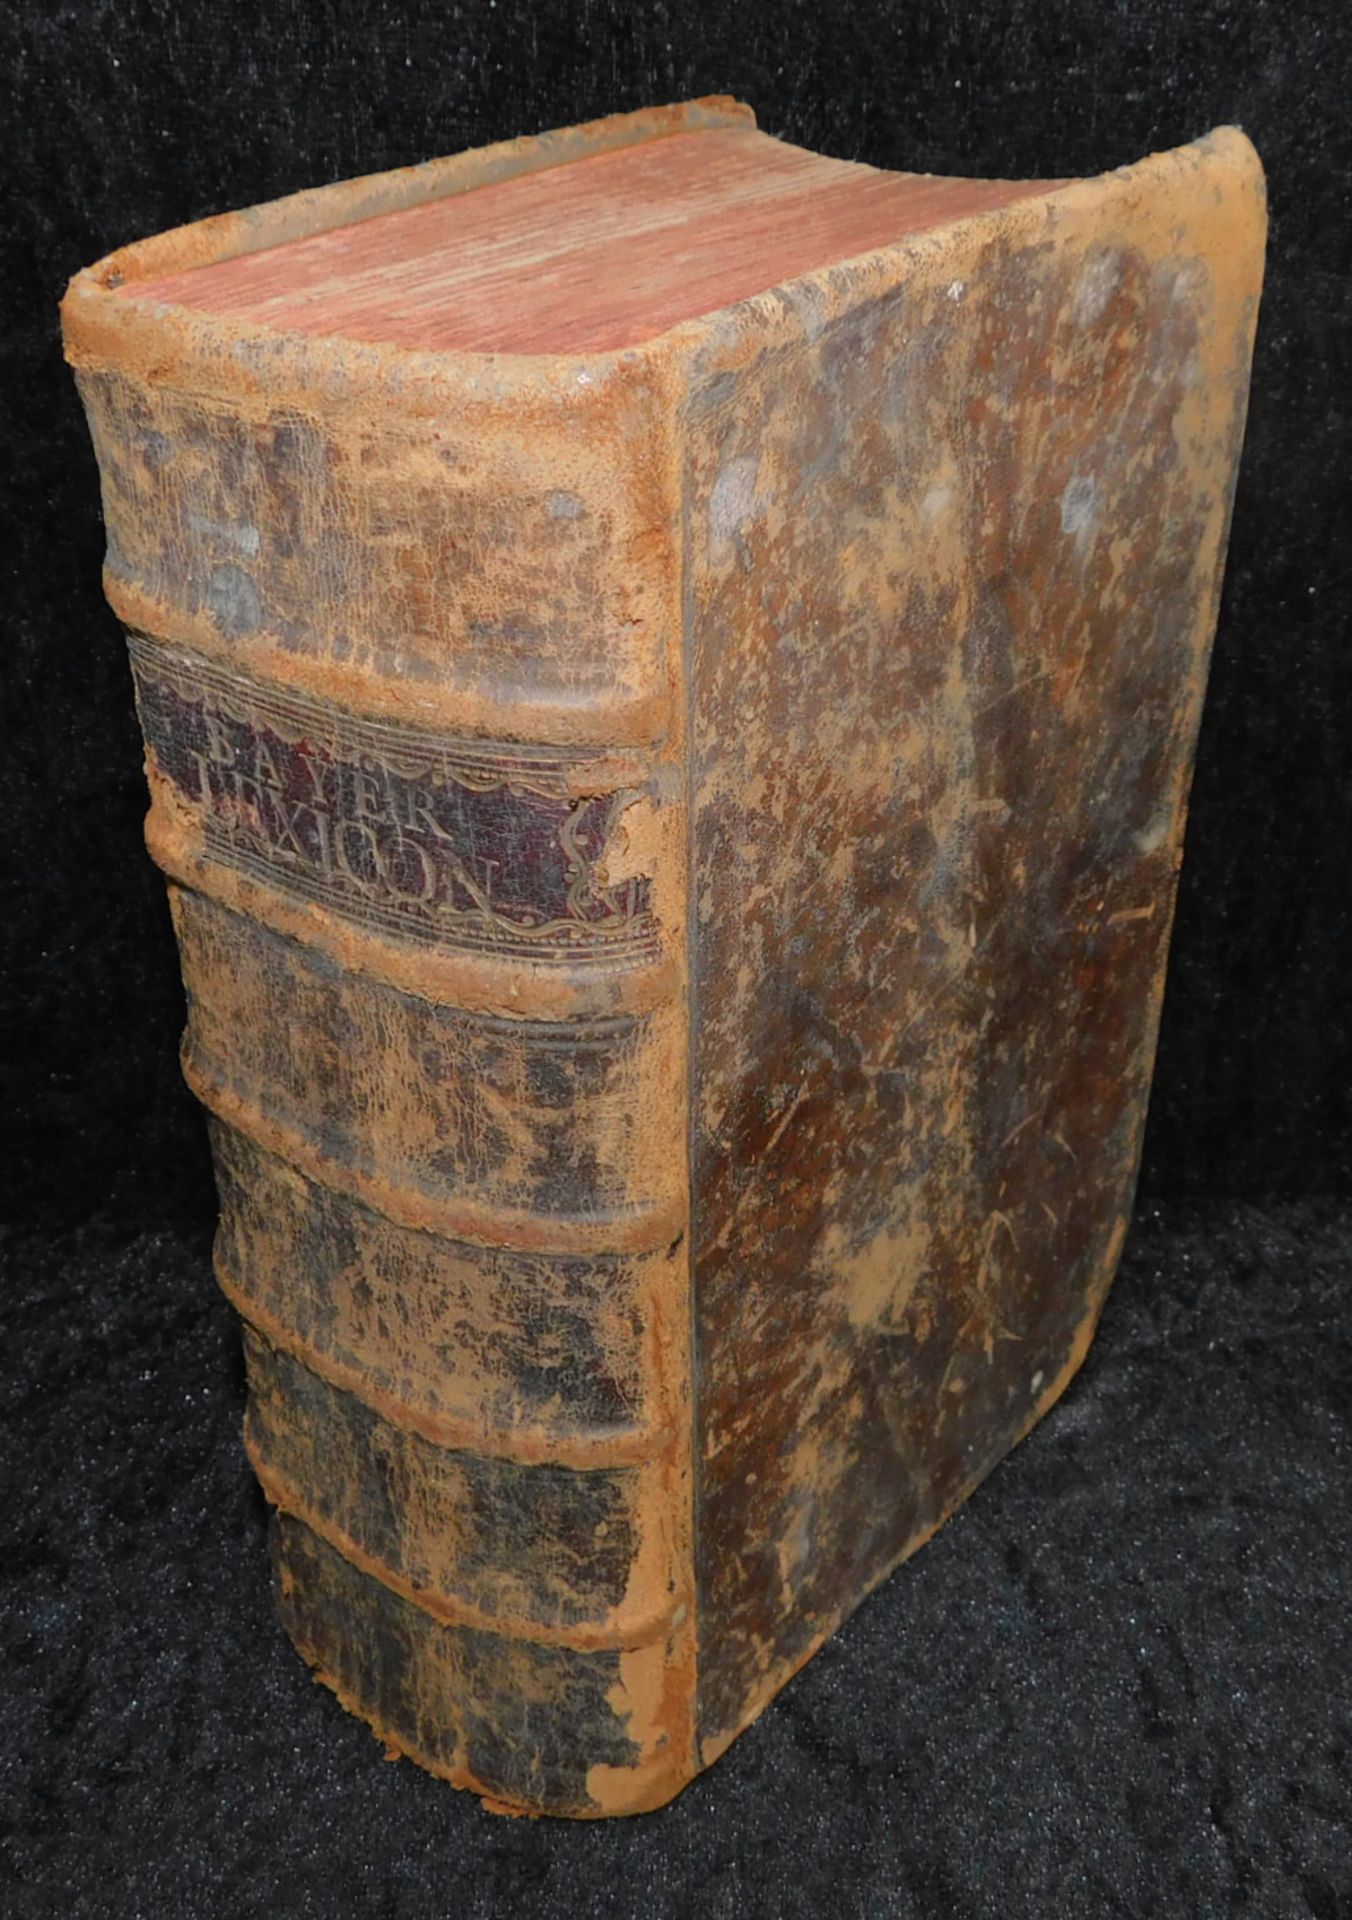 Bayer Lexicon, Jacob Bayer, Verlag Alef, Mainz 1786 "Paedagogus Latinus Germanae Iuventutis"